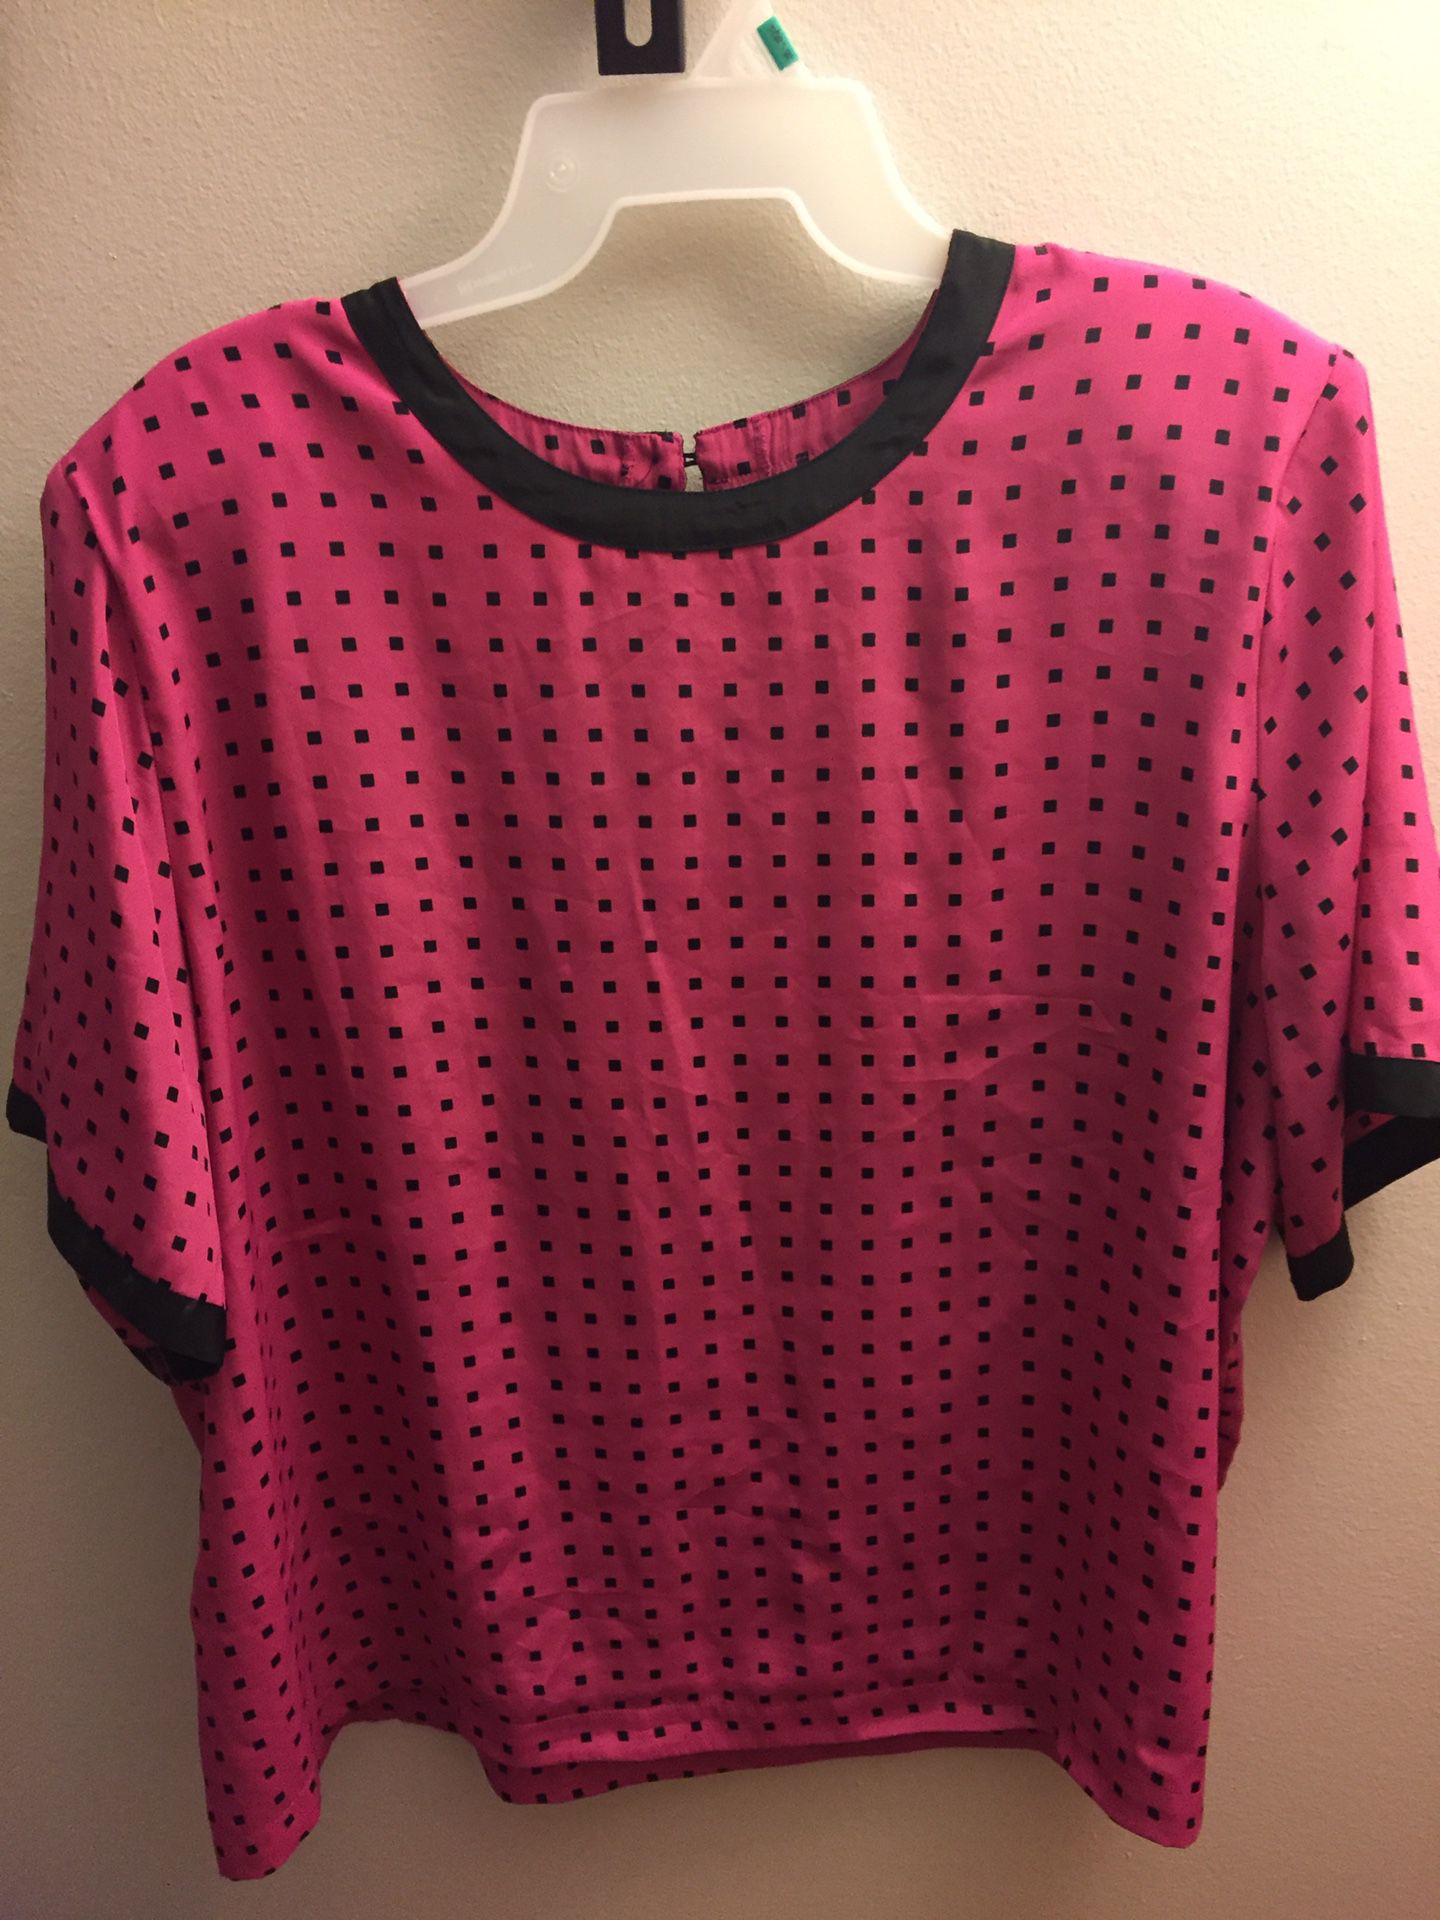 Pink polka dot blouse